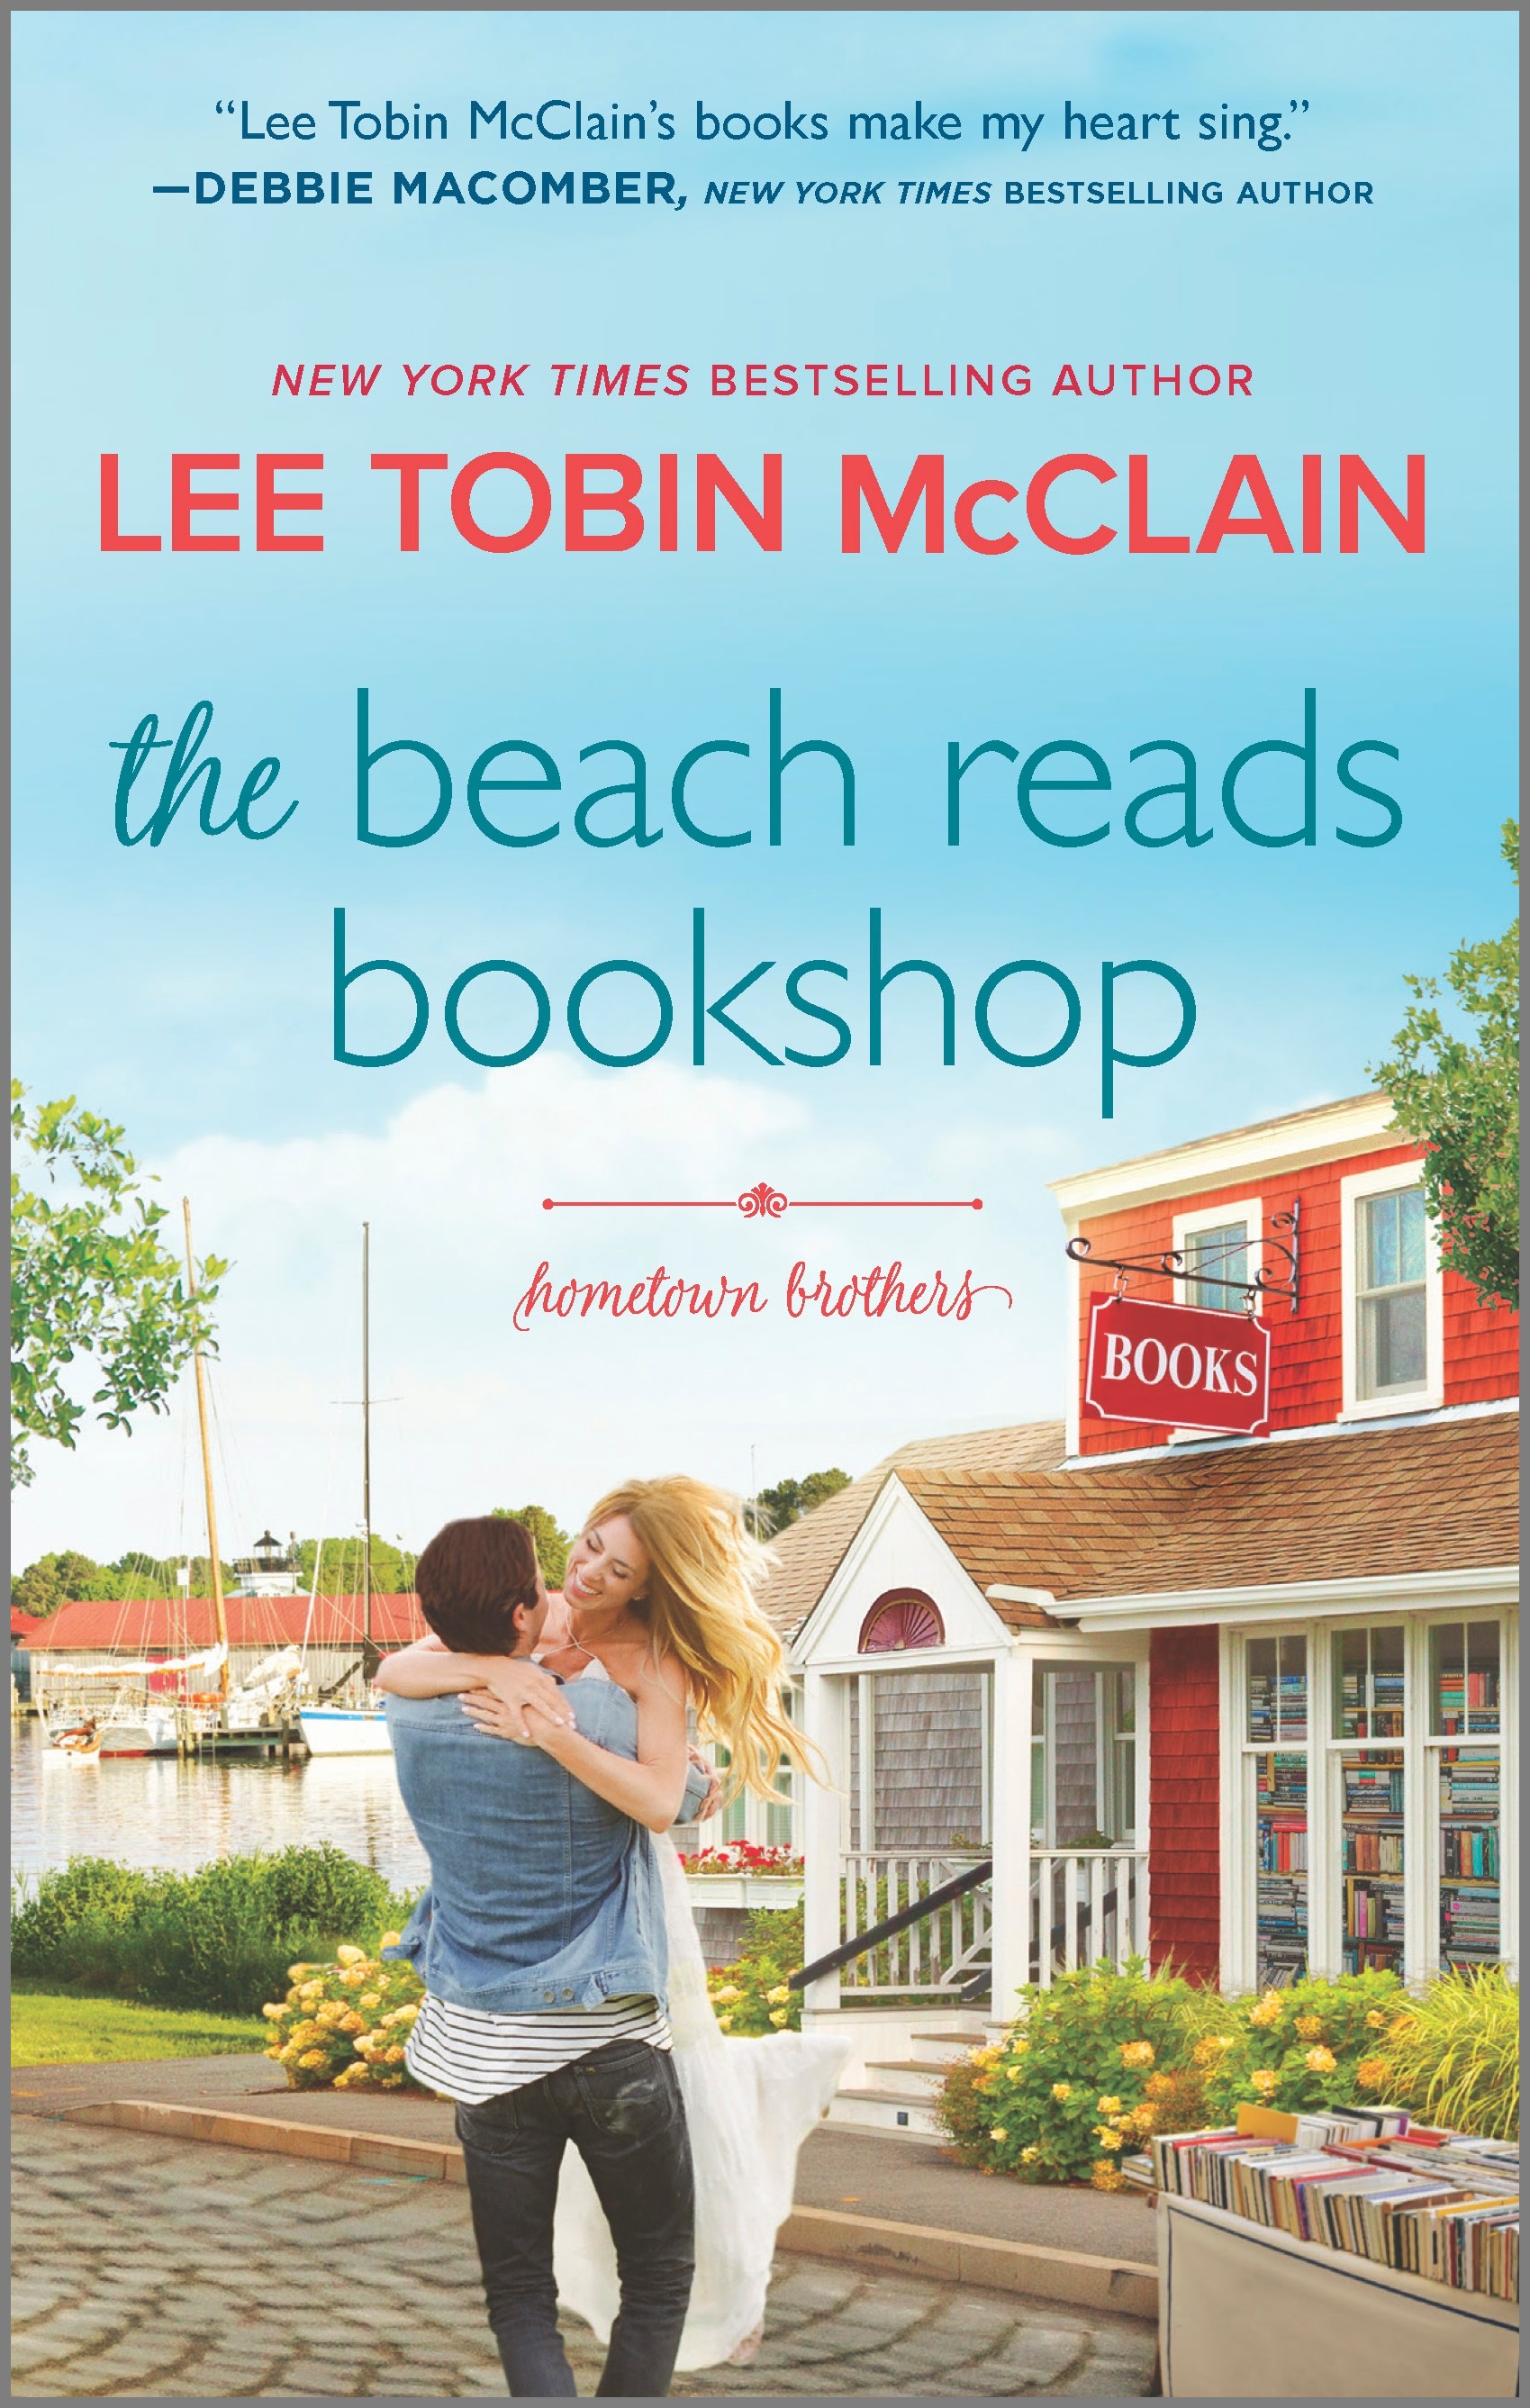 THE BEACH READS BOOKSHOP by Lee Tobin McClain